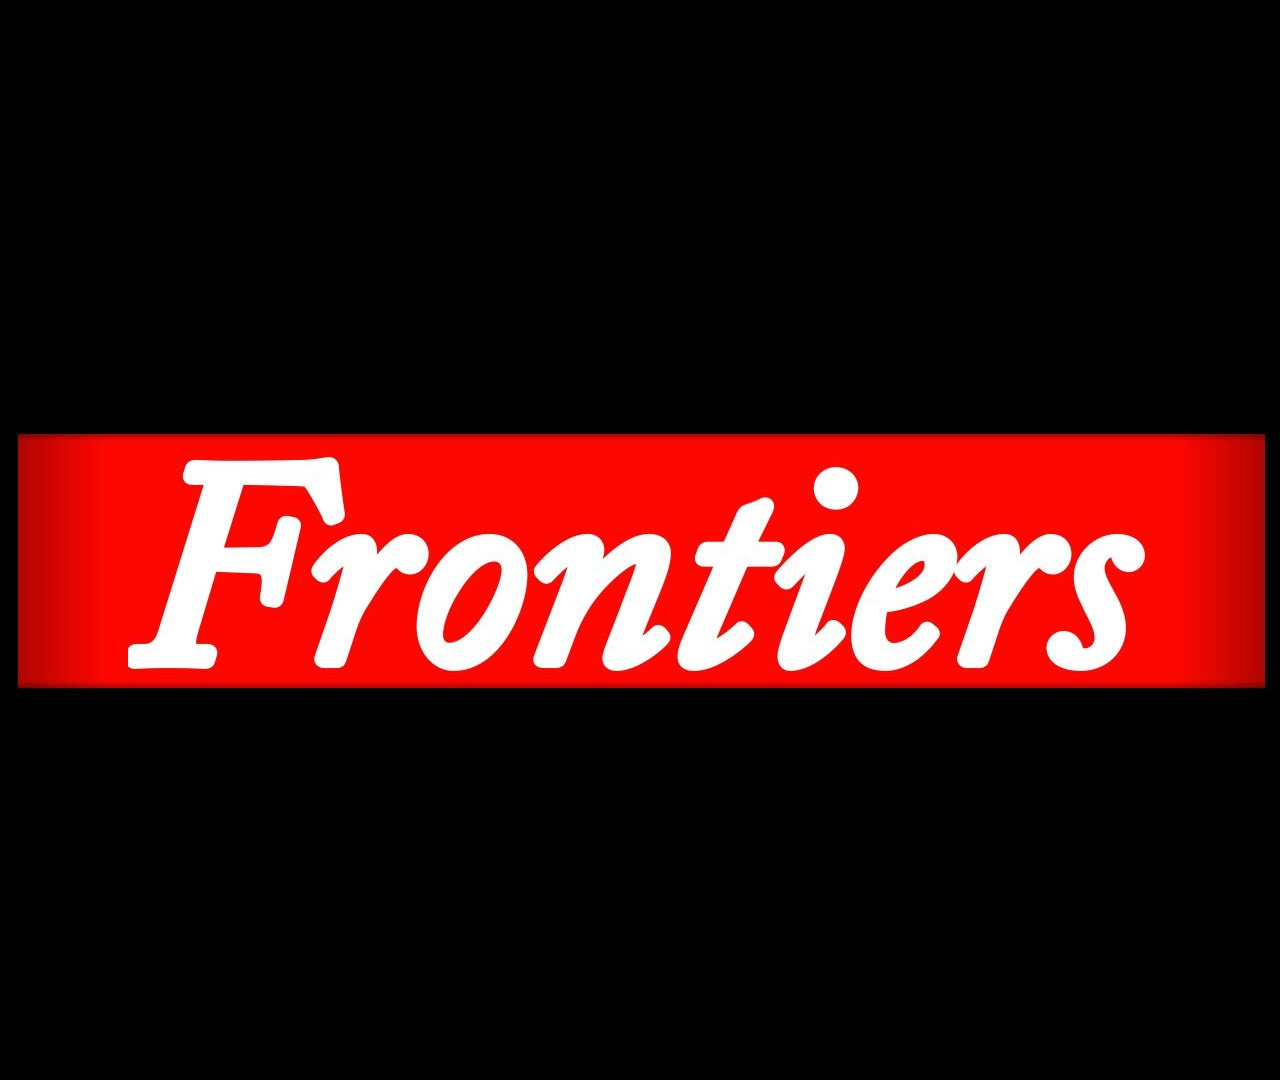 Show Frontiers